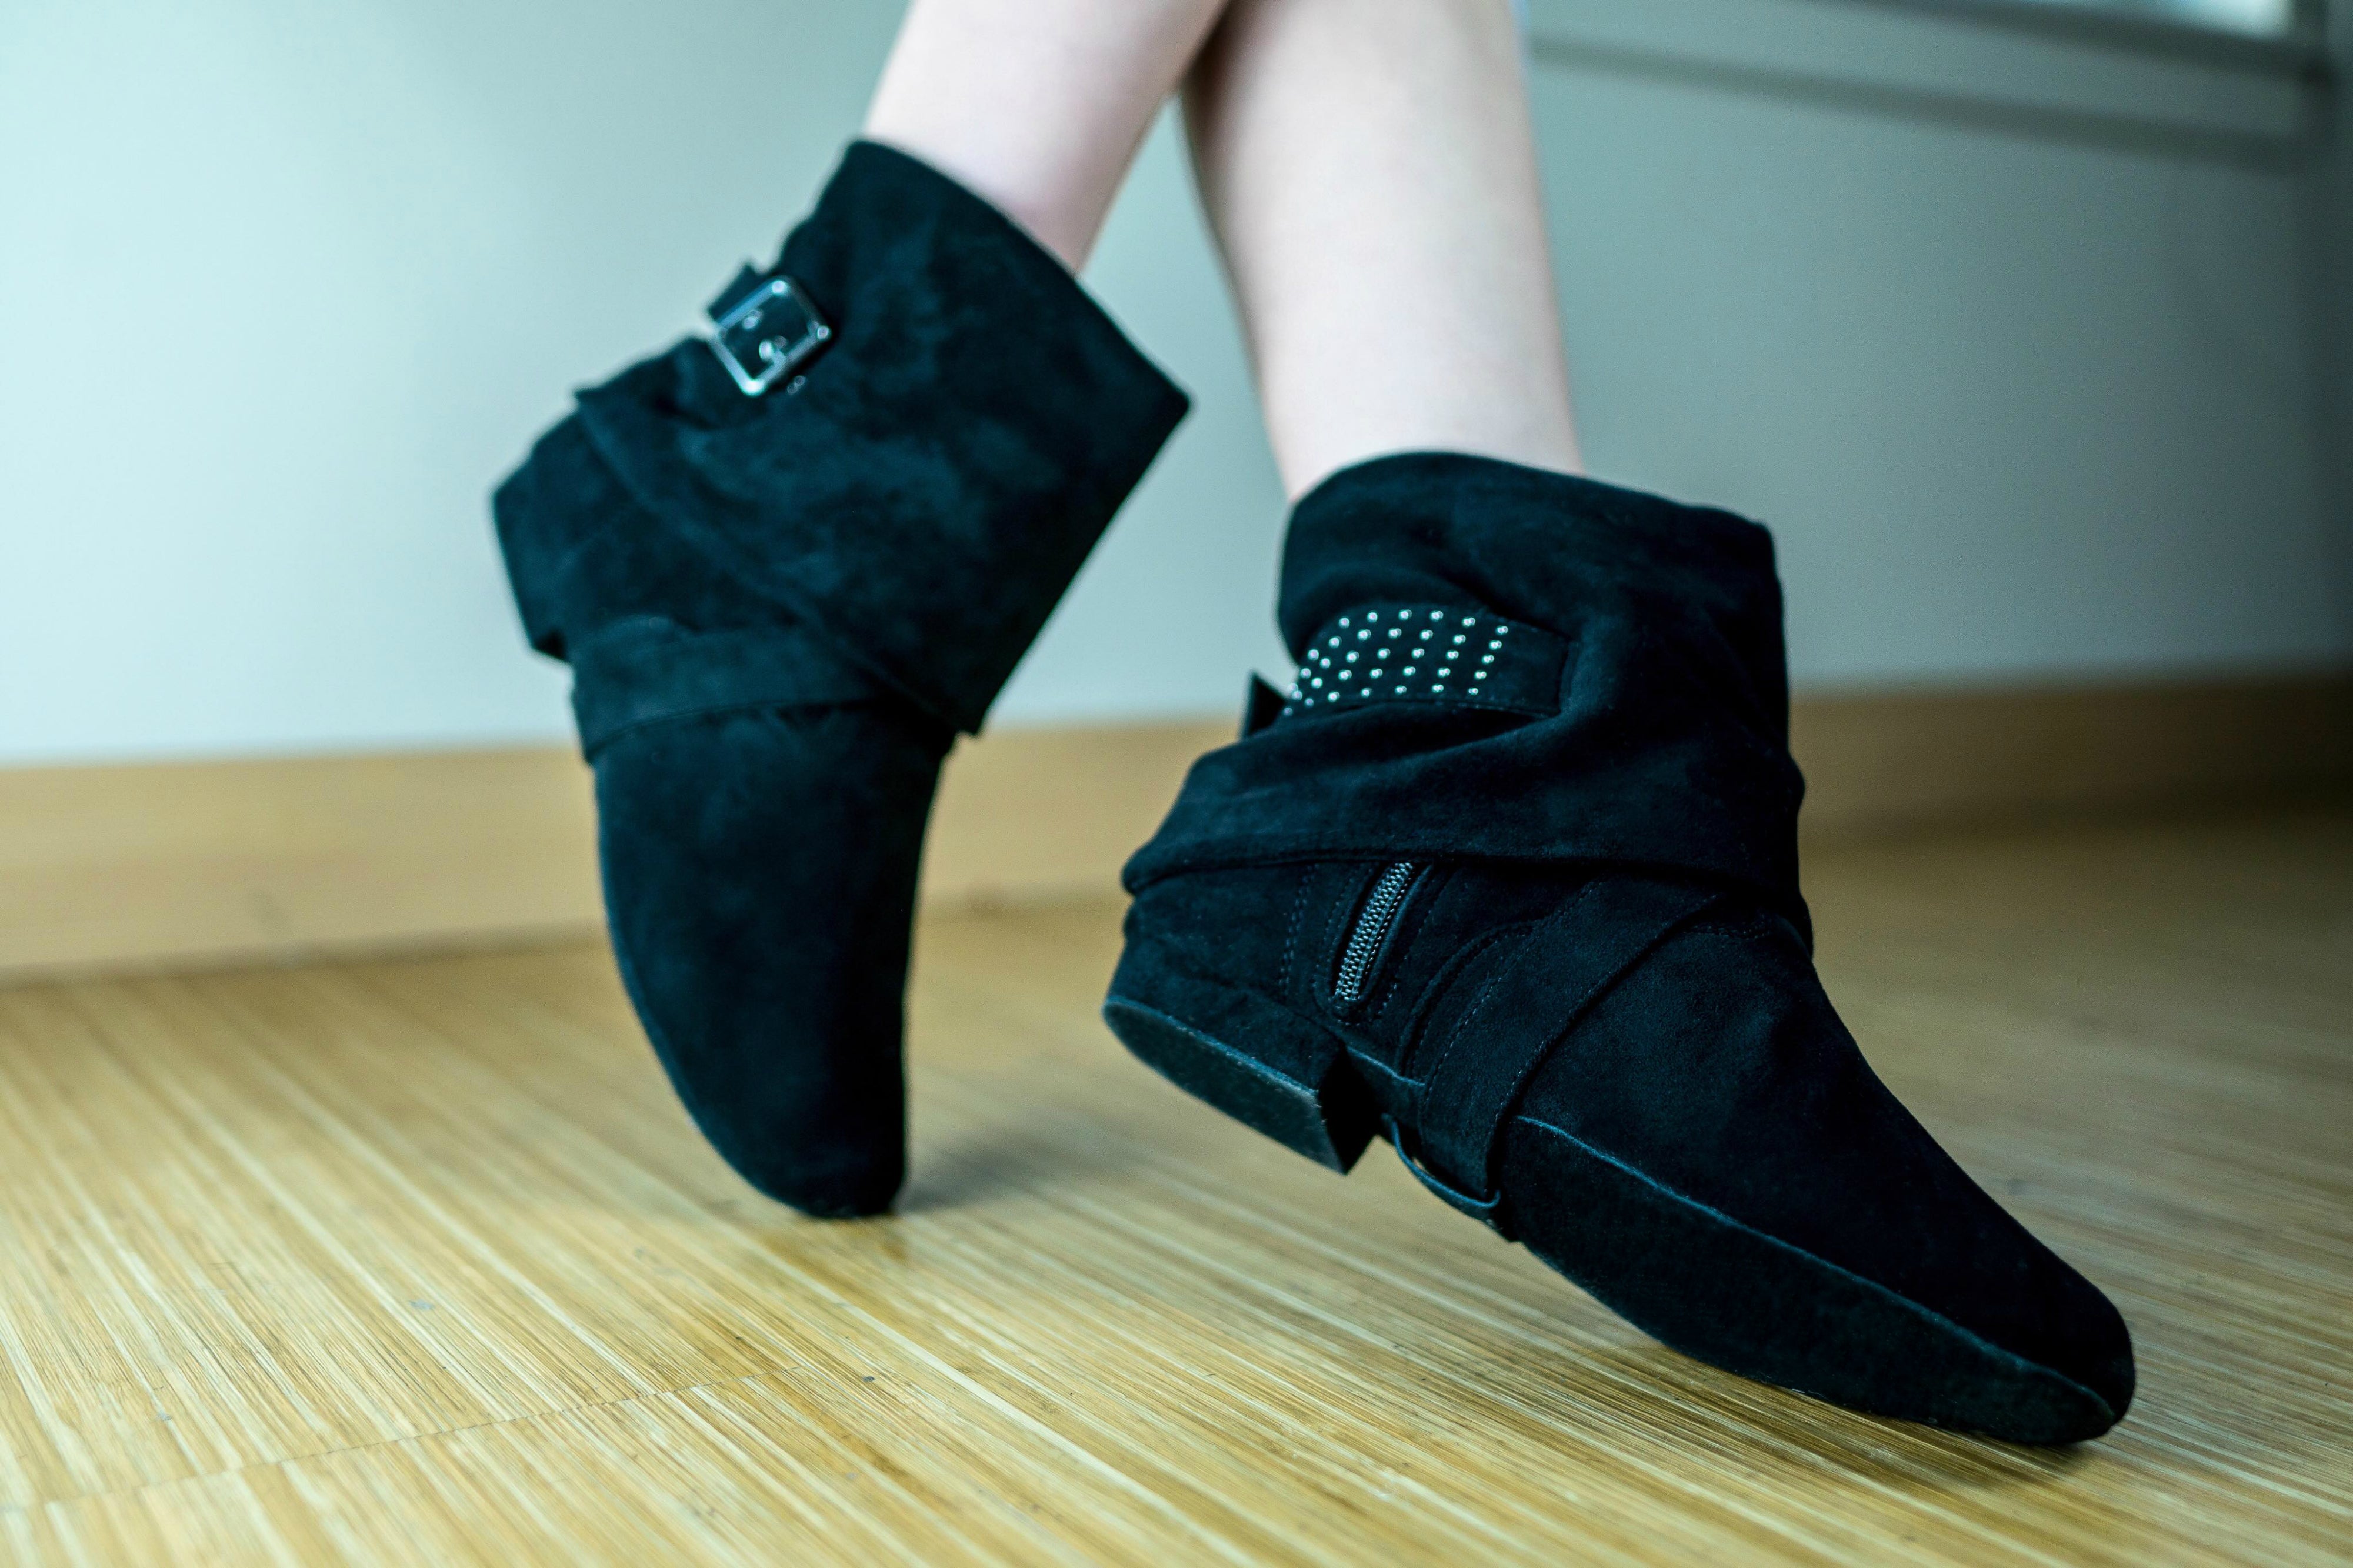 Aurora dance boots black pair folded down angled shot on wood floor